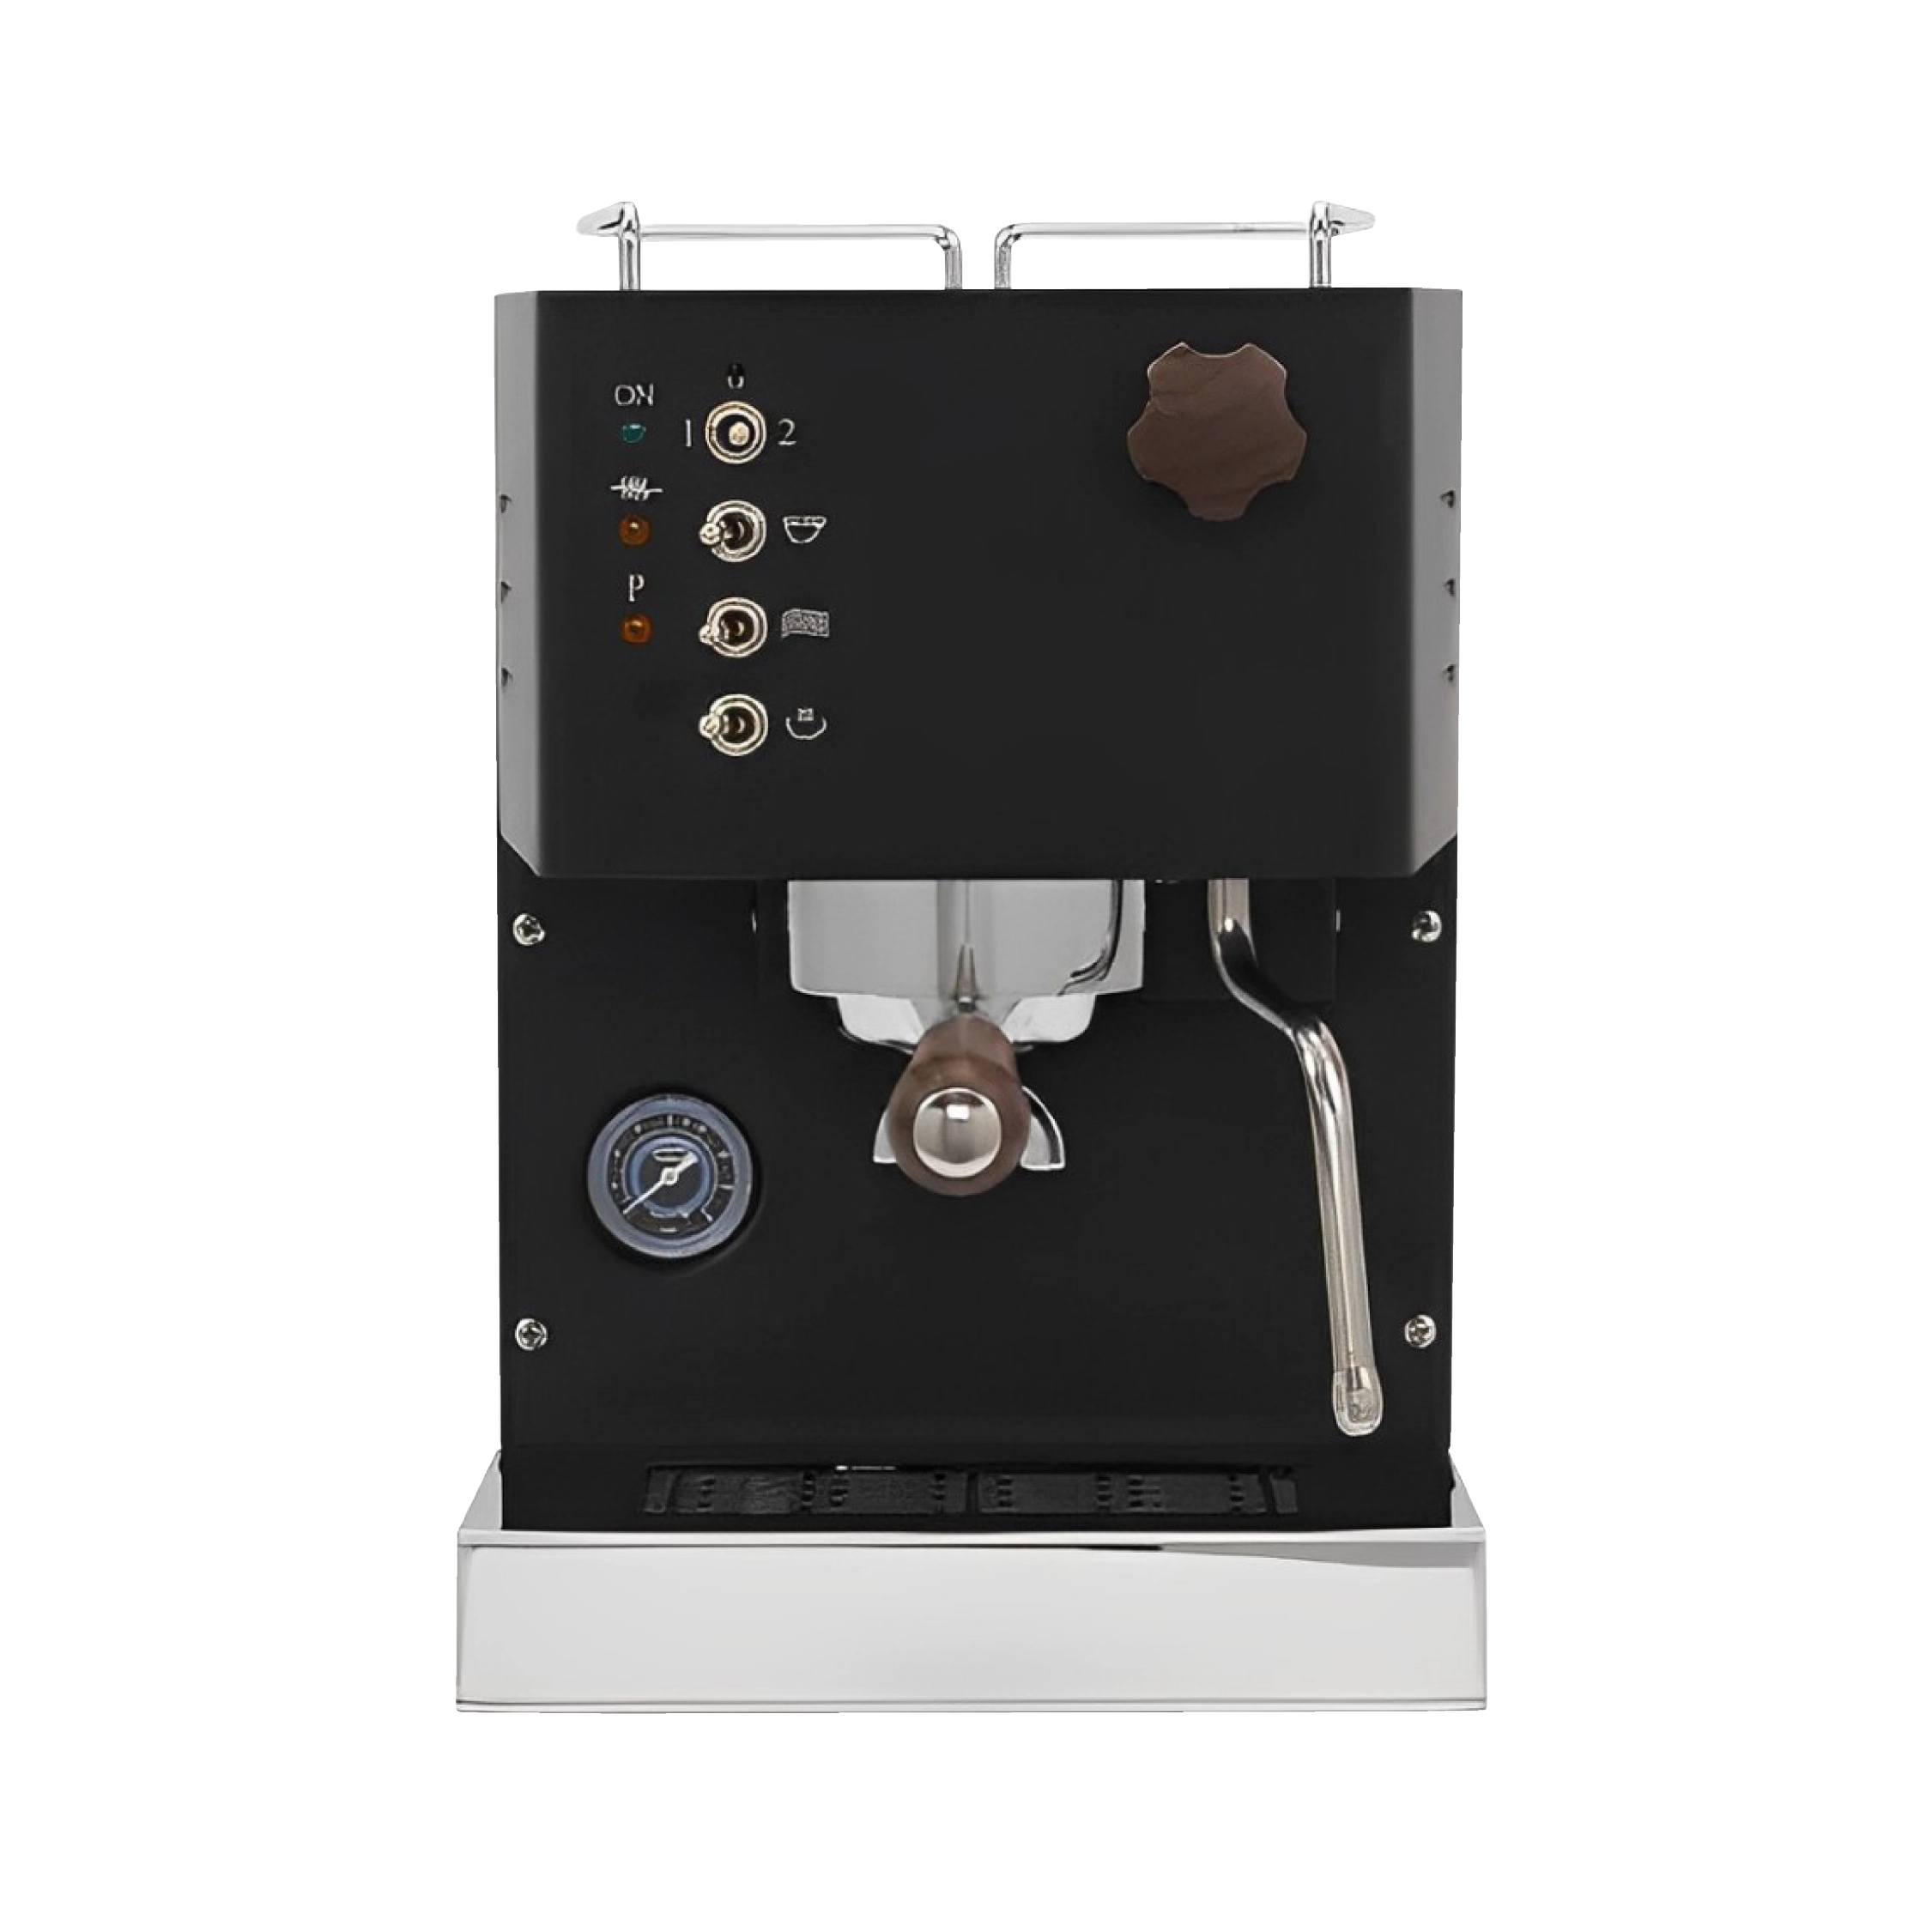 Quick Mill Pippa +  Varia VS3 Coffee Grinder Gen 2 + 250g  After Dark Blend + Precision Accessories